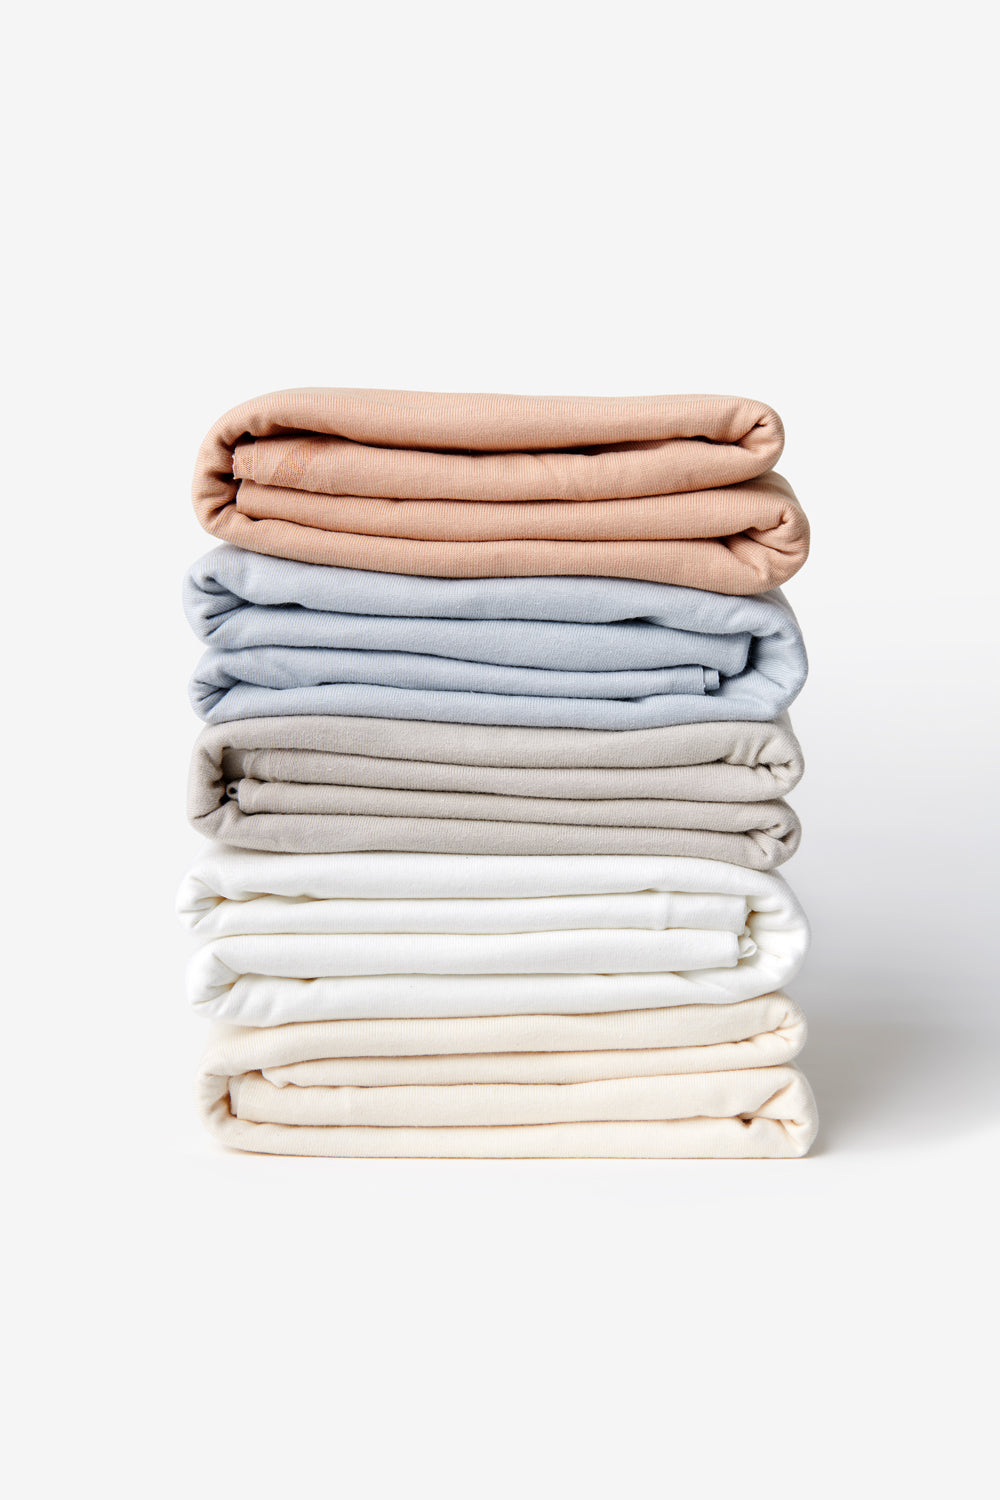 Unbleached Cotton Studio Cloth – Case for Making